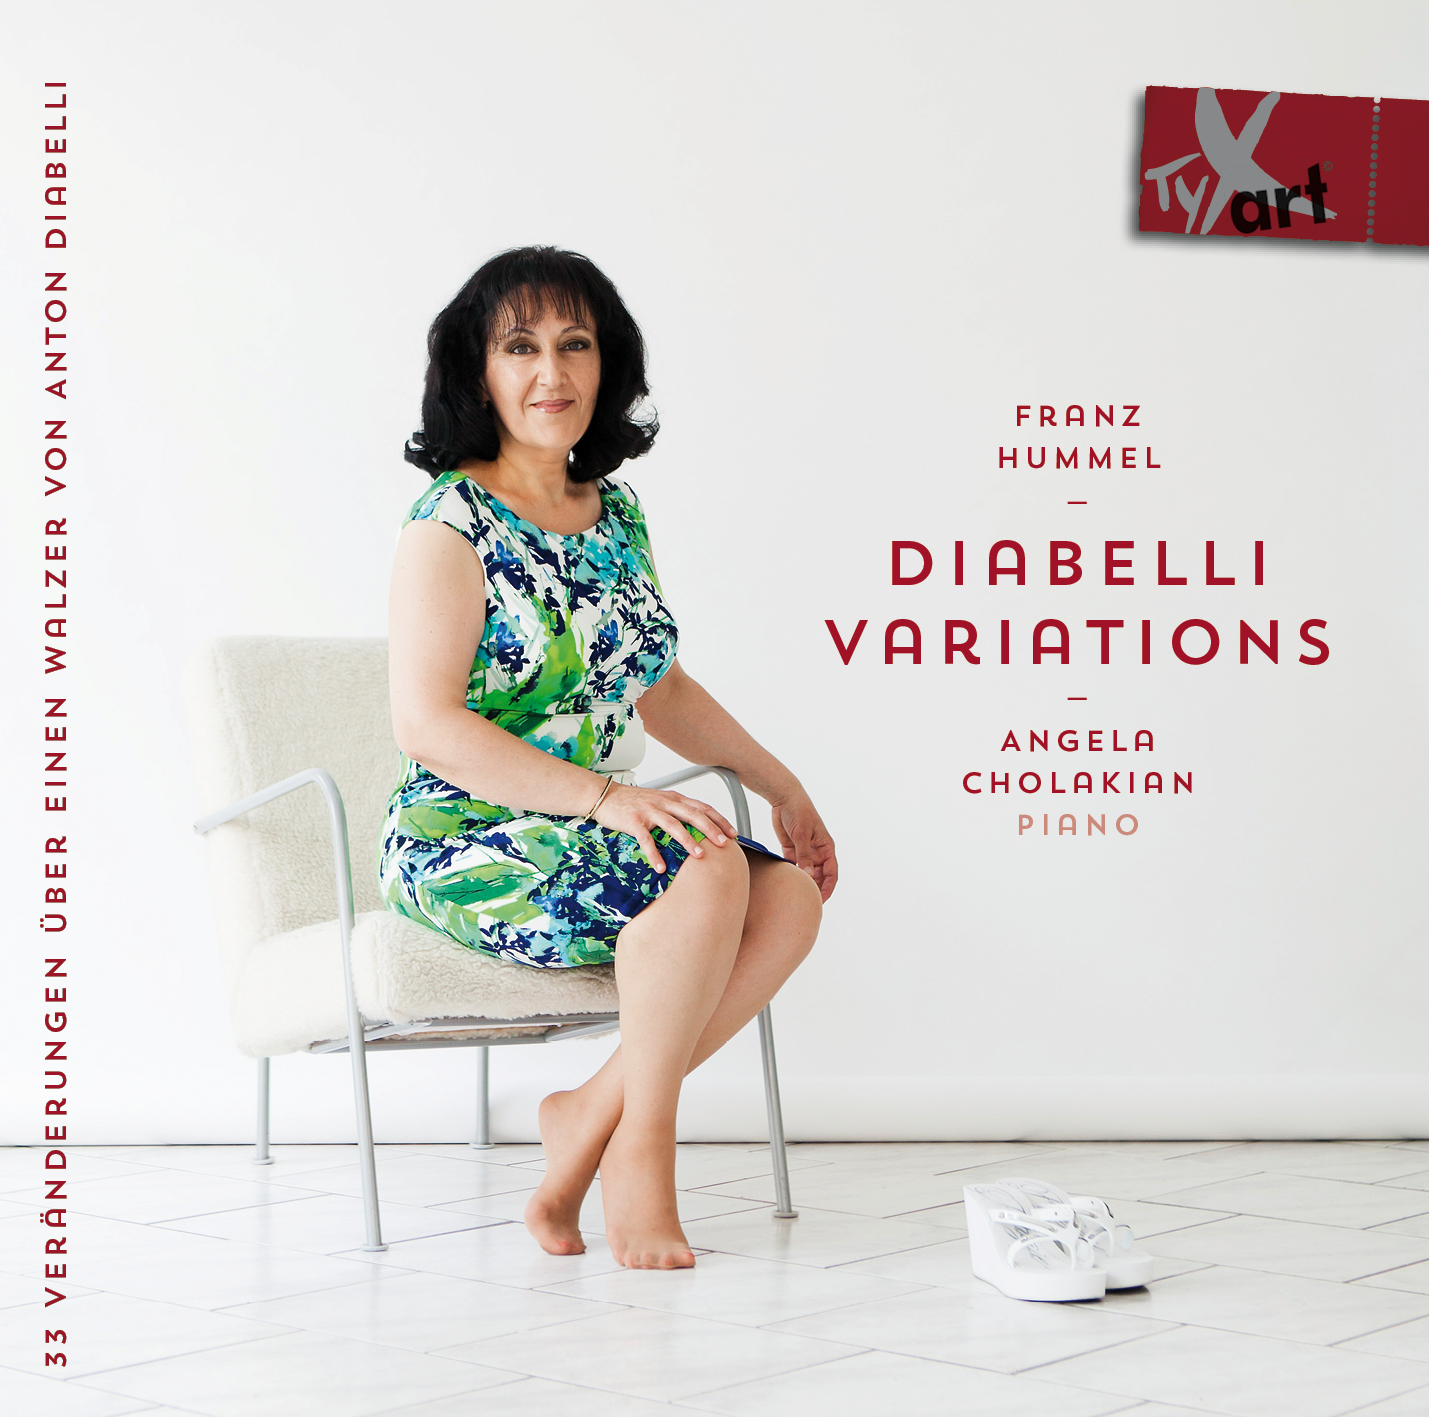 Angela Cholakian, Piano: Hummel Diabelli Variations